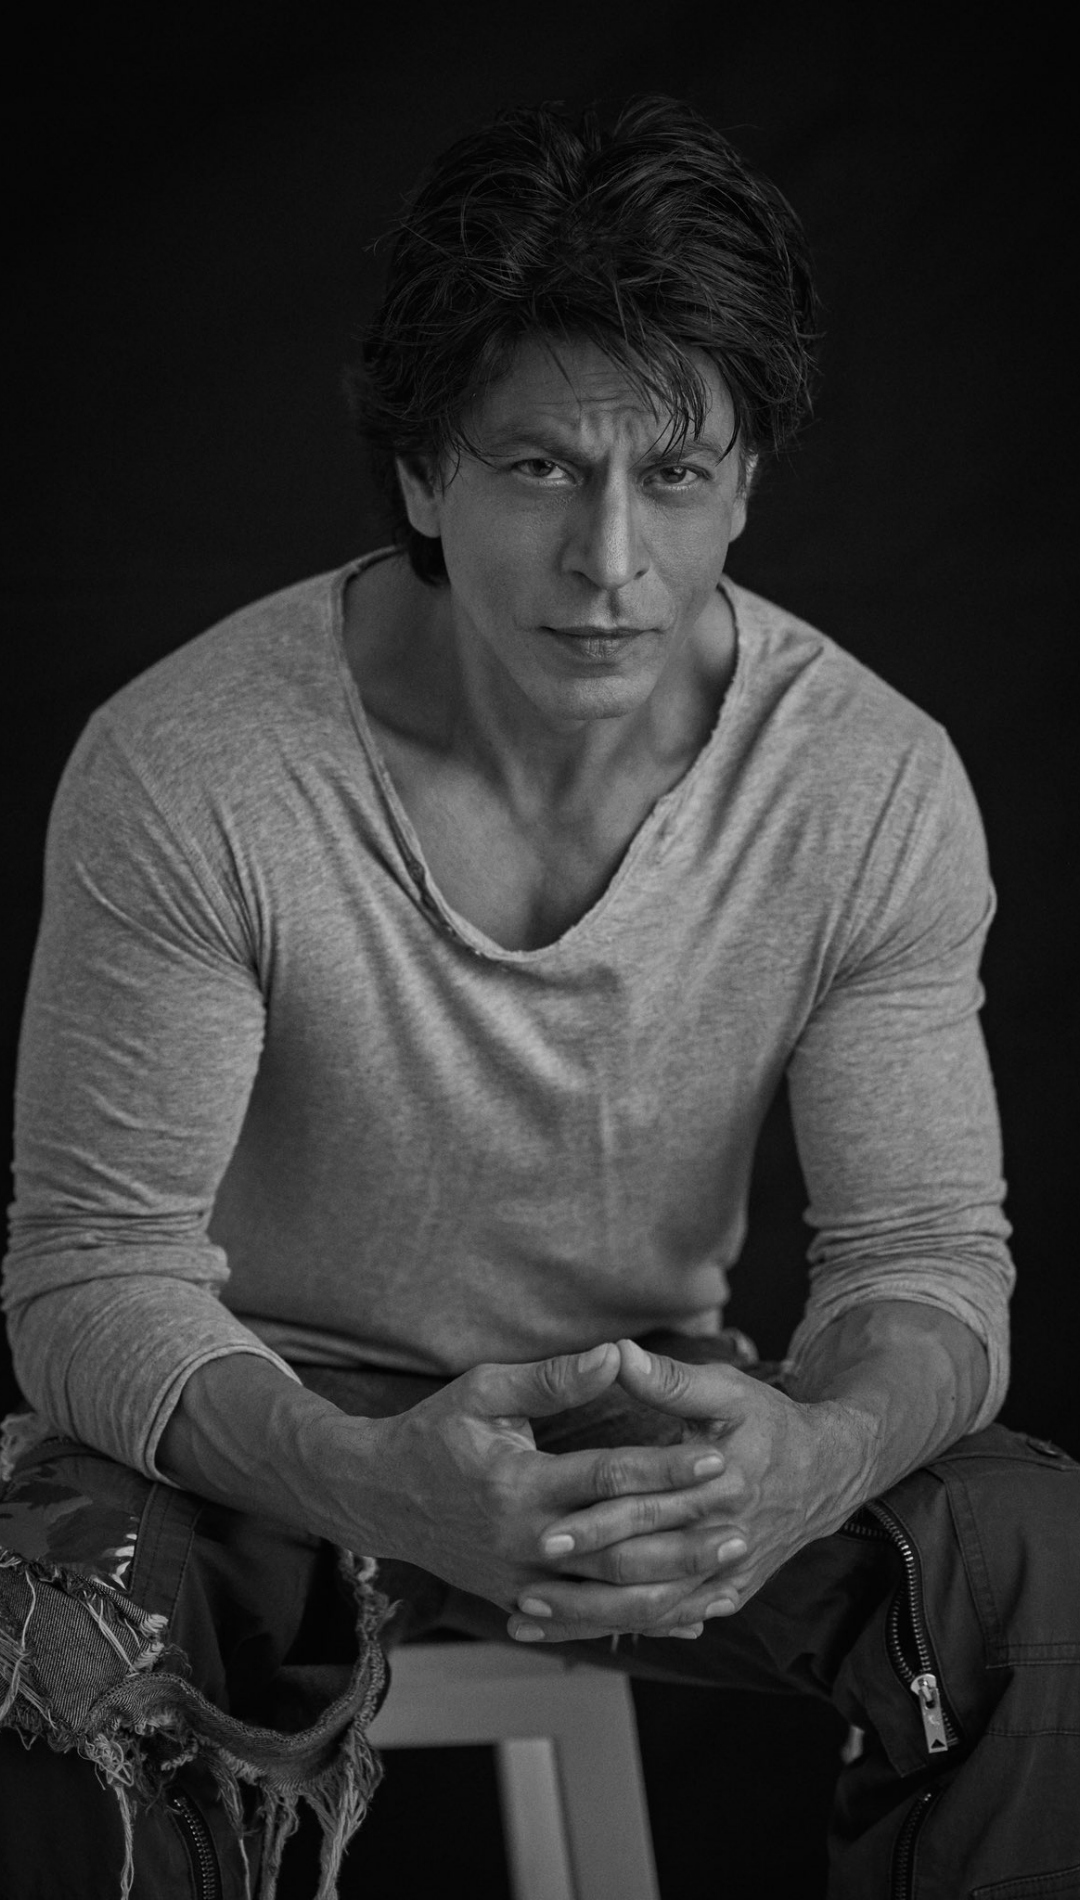 Shah Rukh Khan Wallpaper Pictures